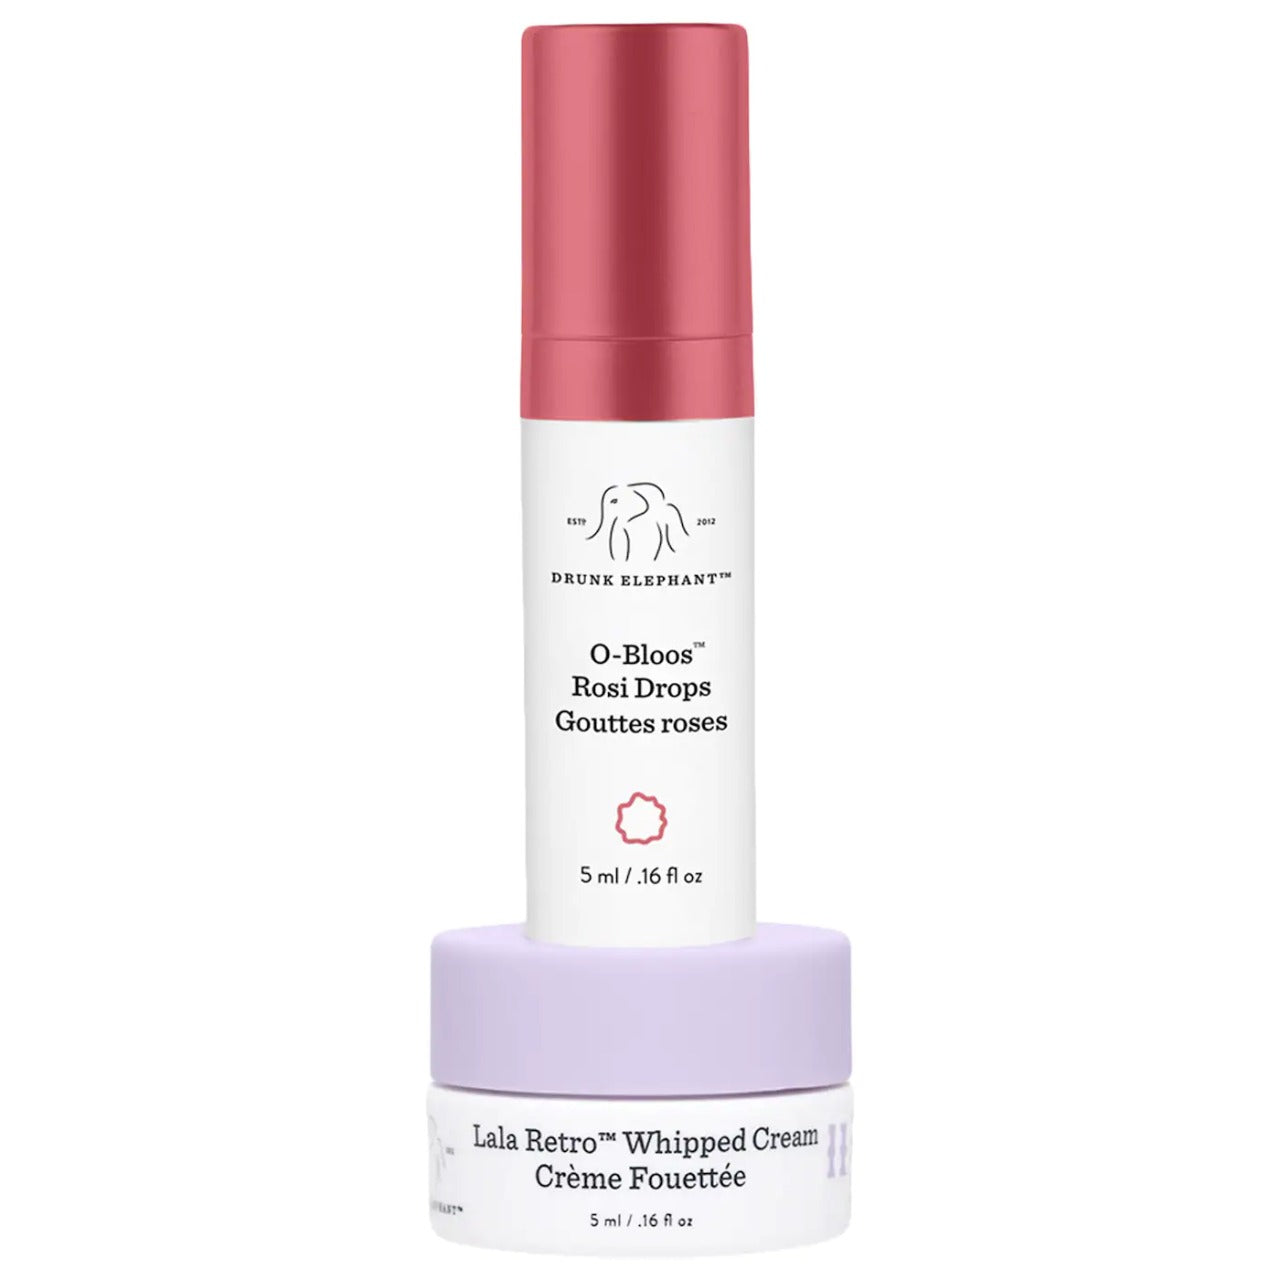 O-Bloos™ Rosi Drops + Lala Retro™ Whipped Cream trial-size se